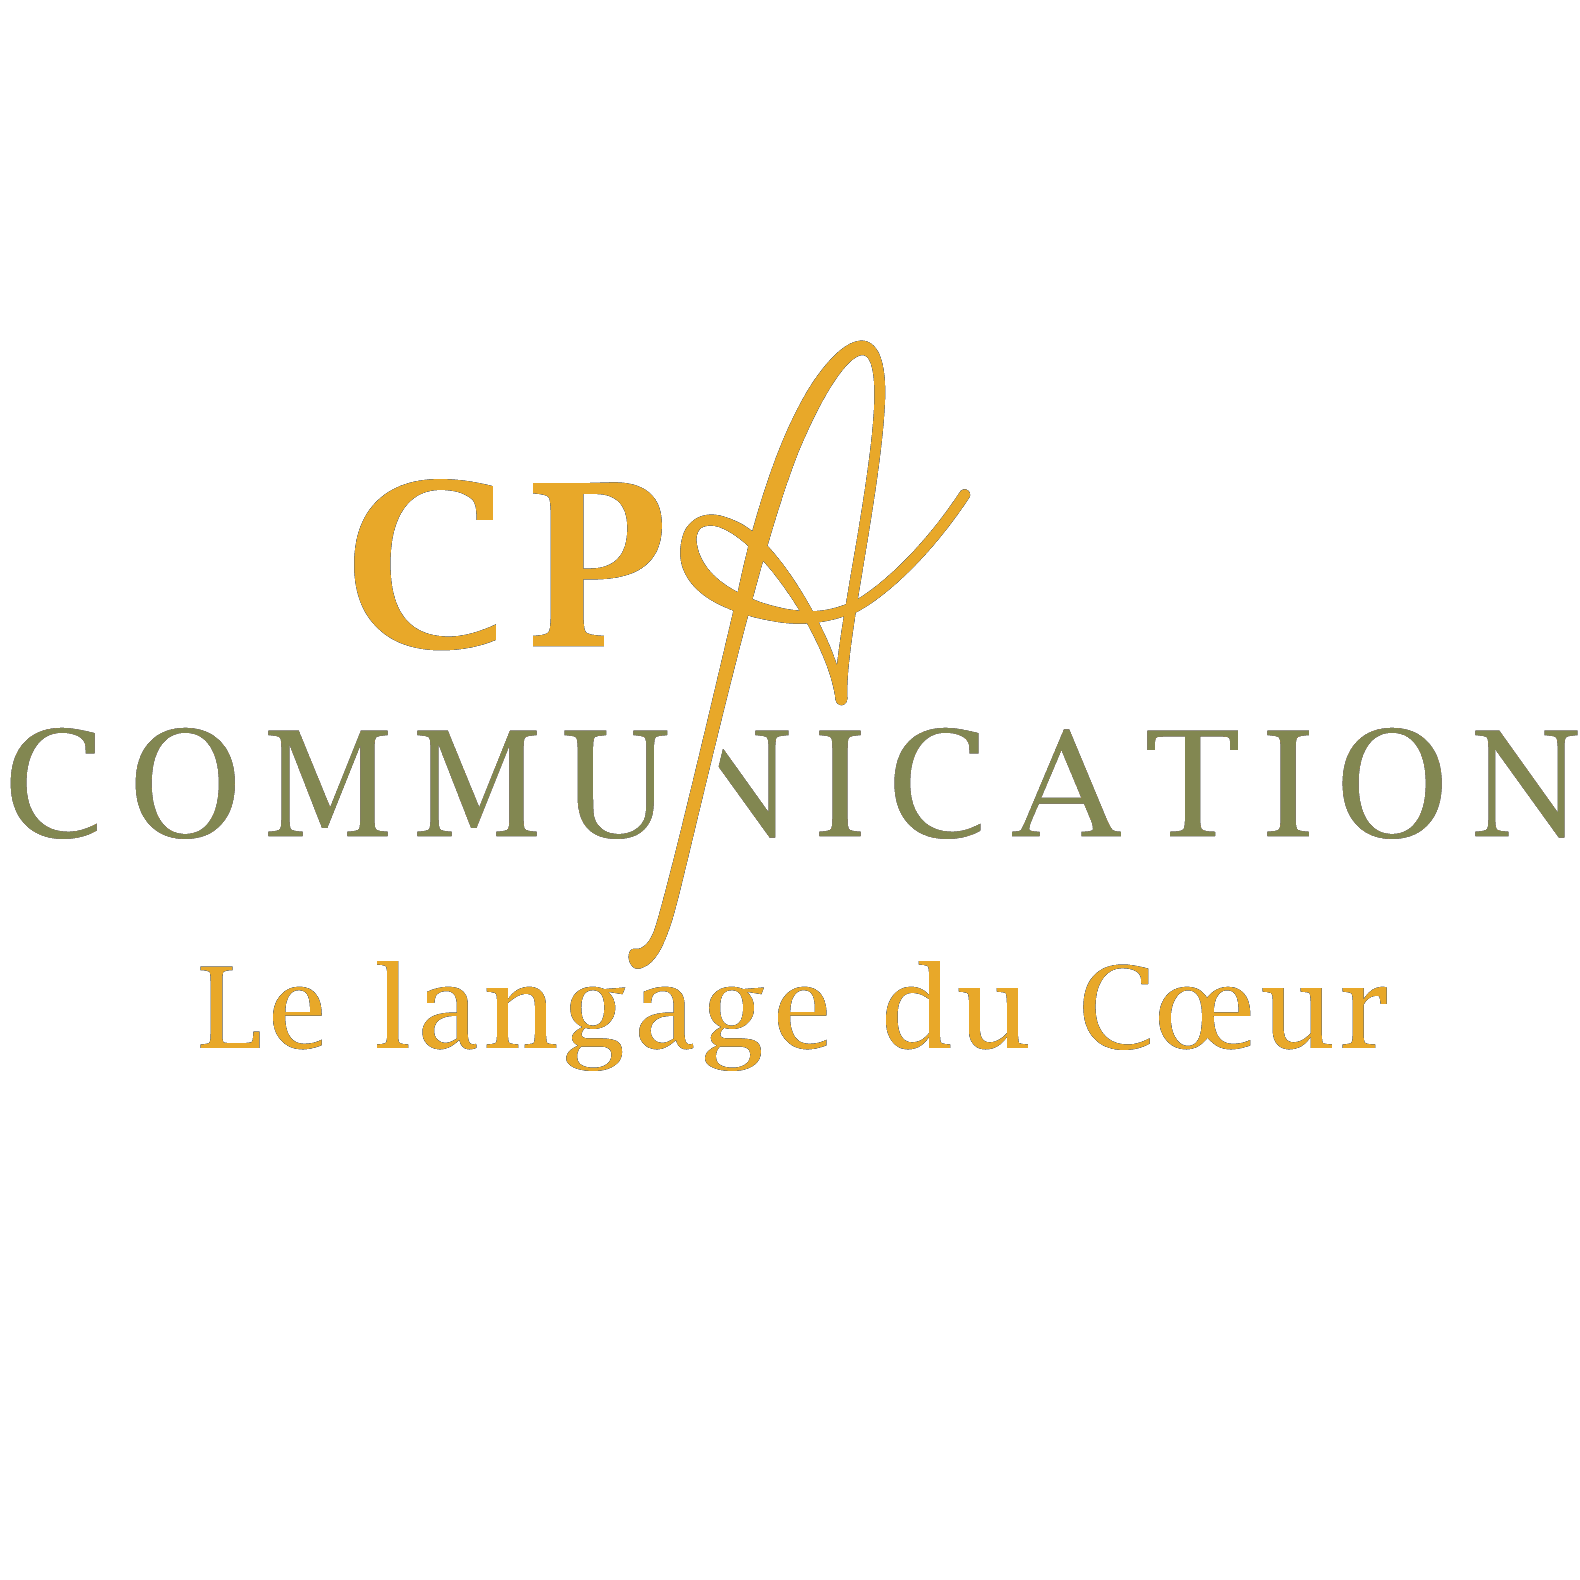 Cpa Communication Logo Carre Mieux